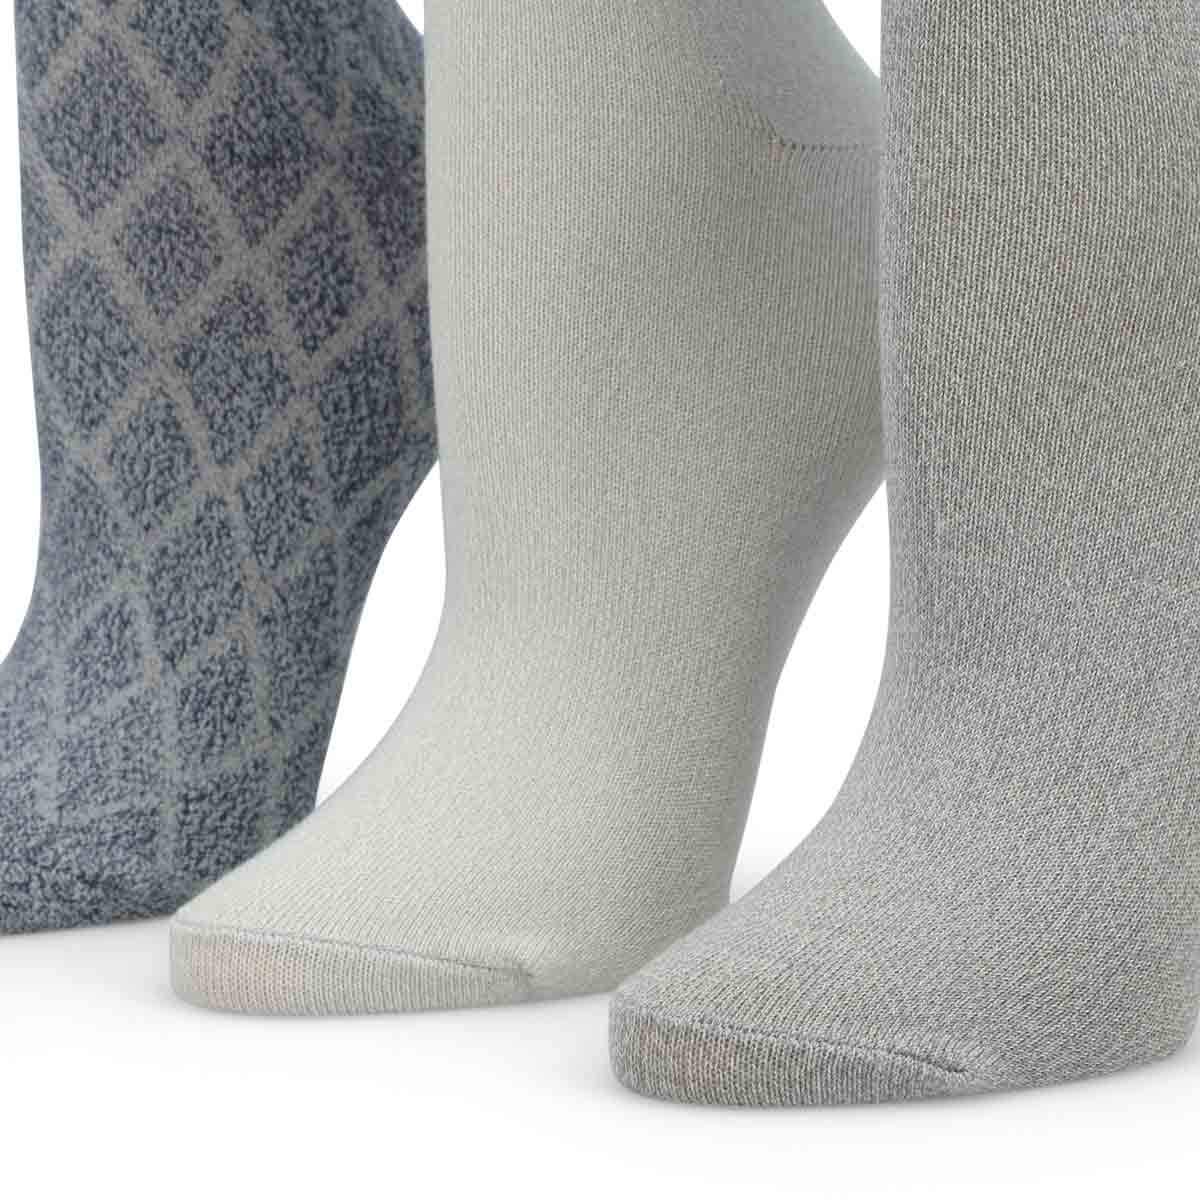 Women's Diamond Texture Socks -3pk